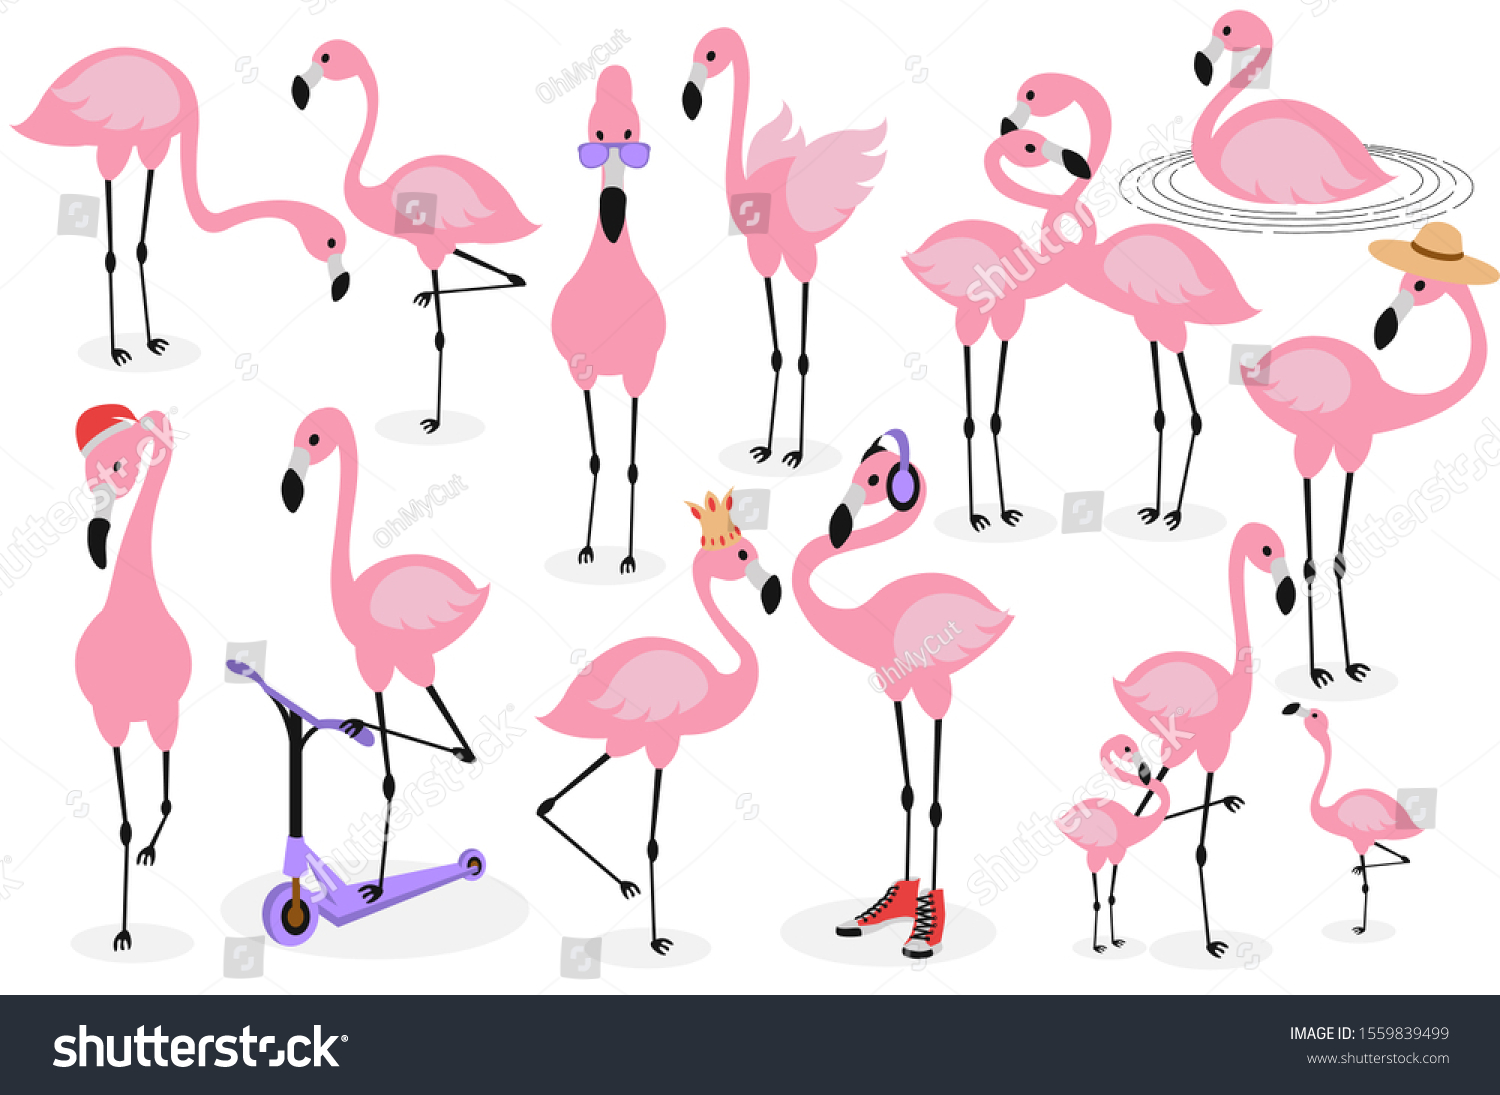 3,292 Flamingo poses Images, Stock Photos & Vectors | Shutterstock